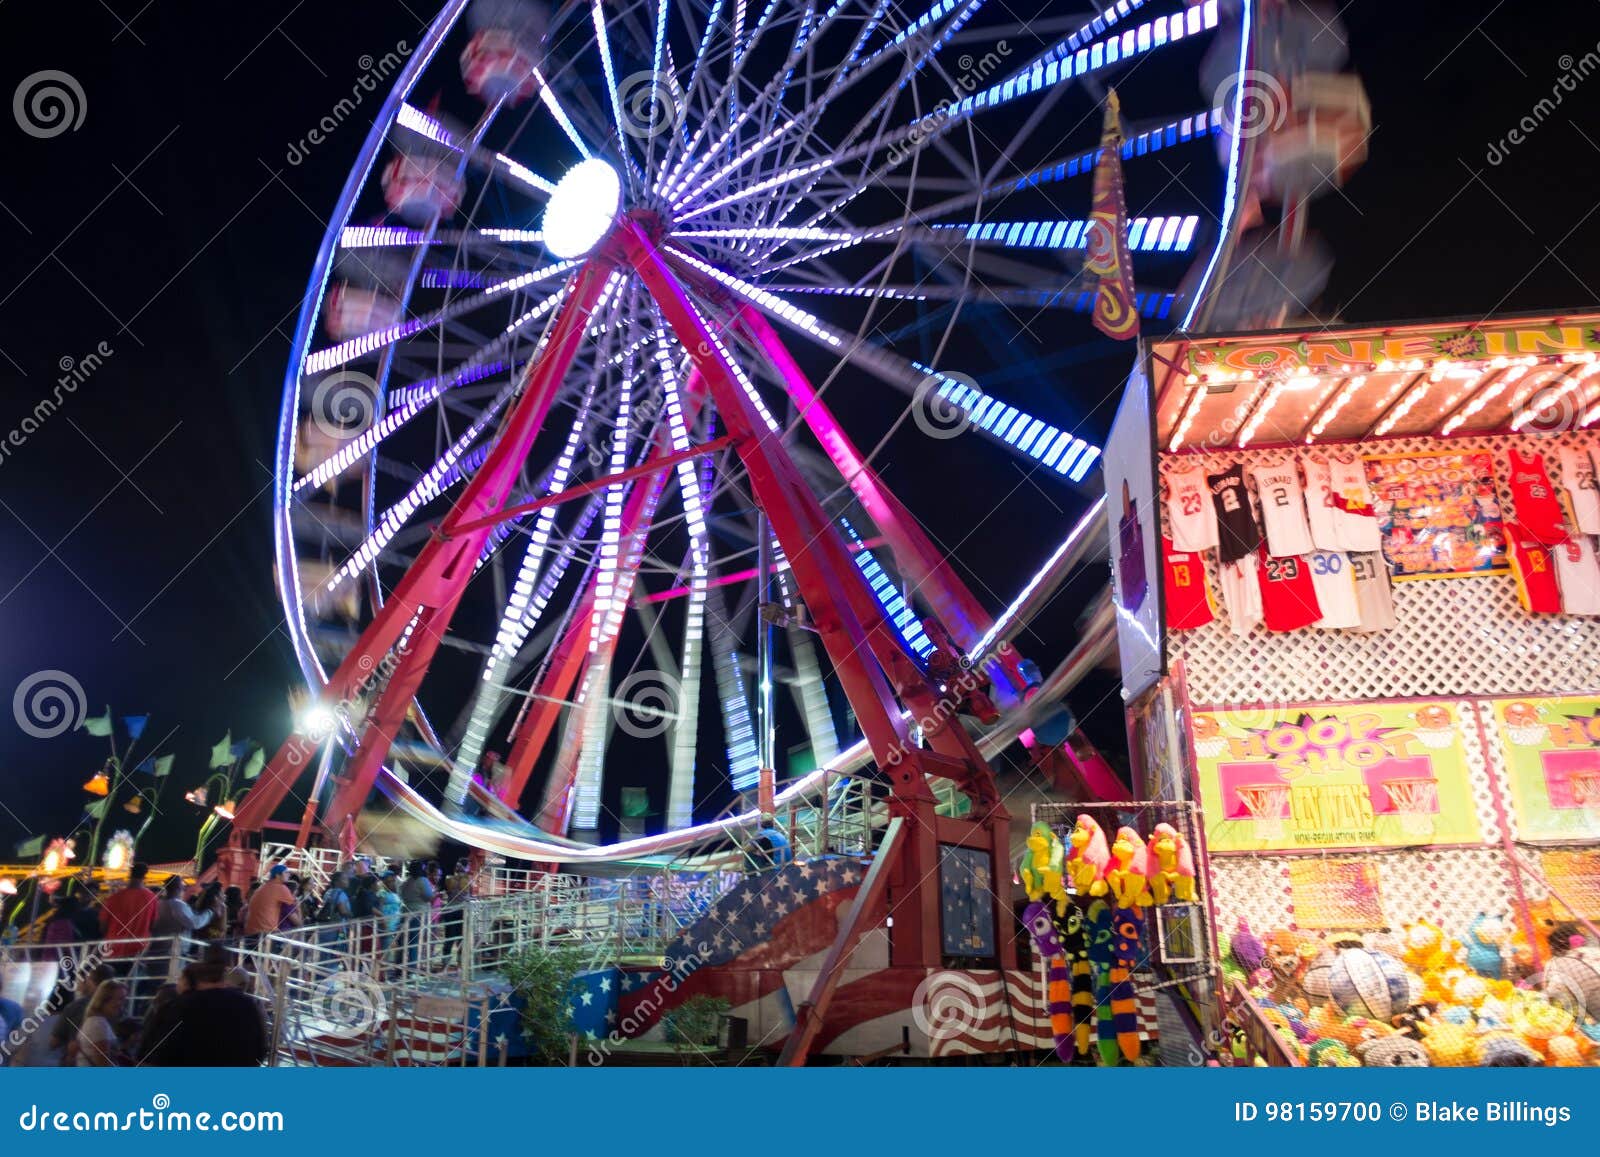 Delta Fair, Memphis, TN County Fair Midway With Ferris Wheel Editorial ...